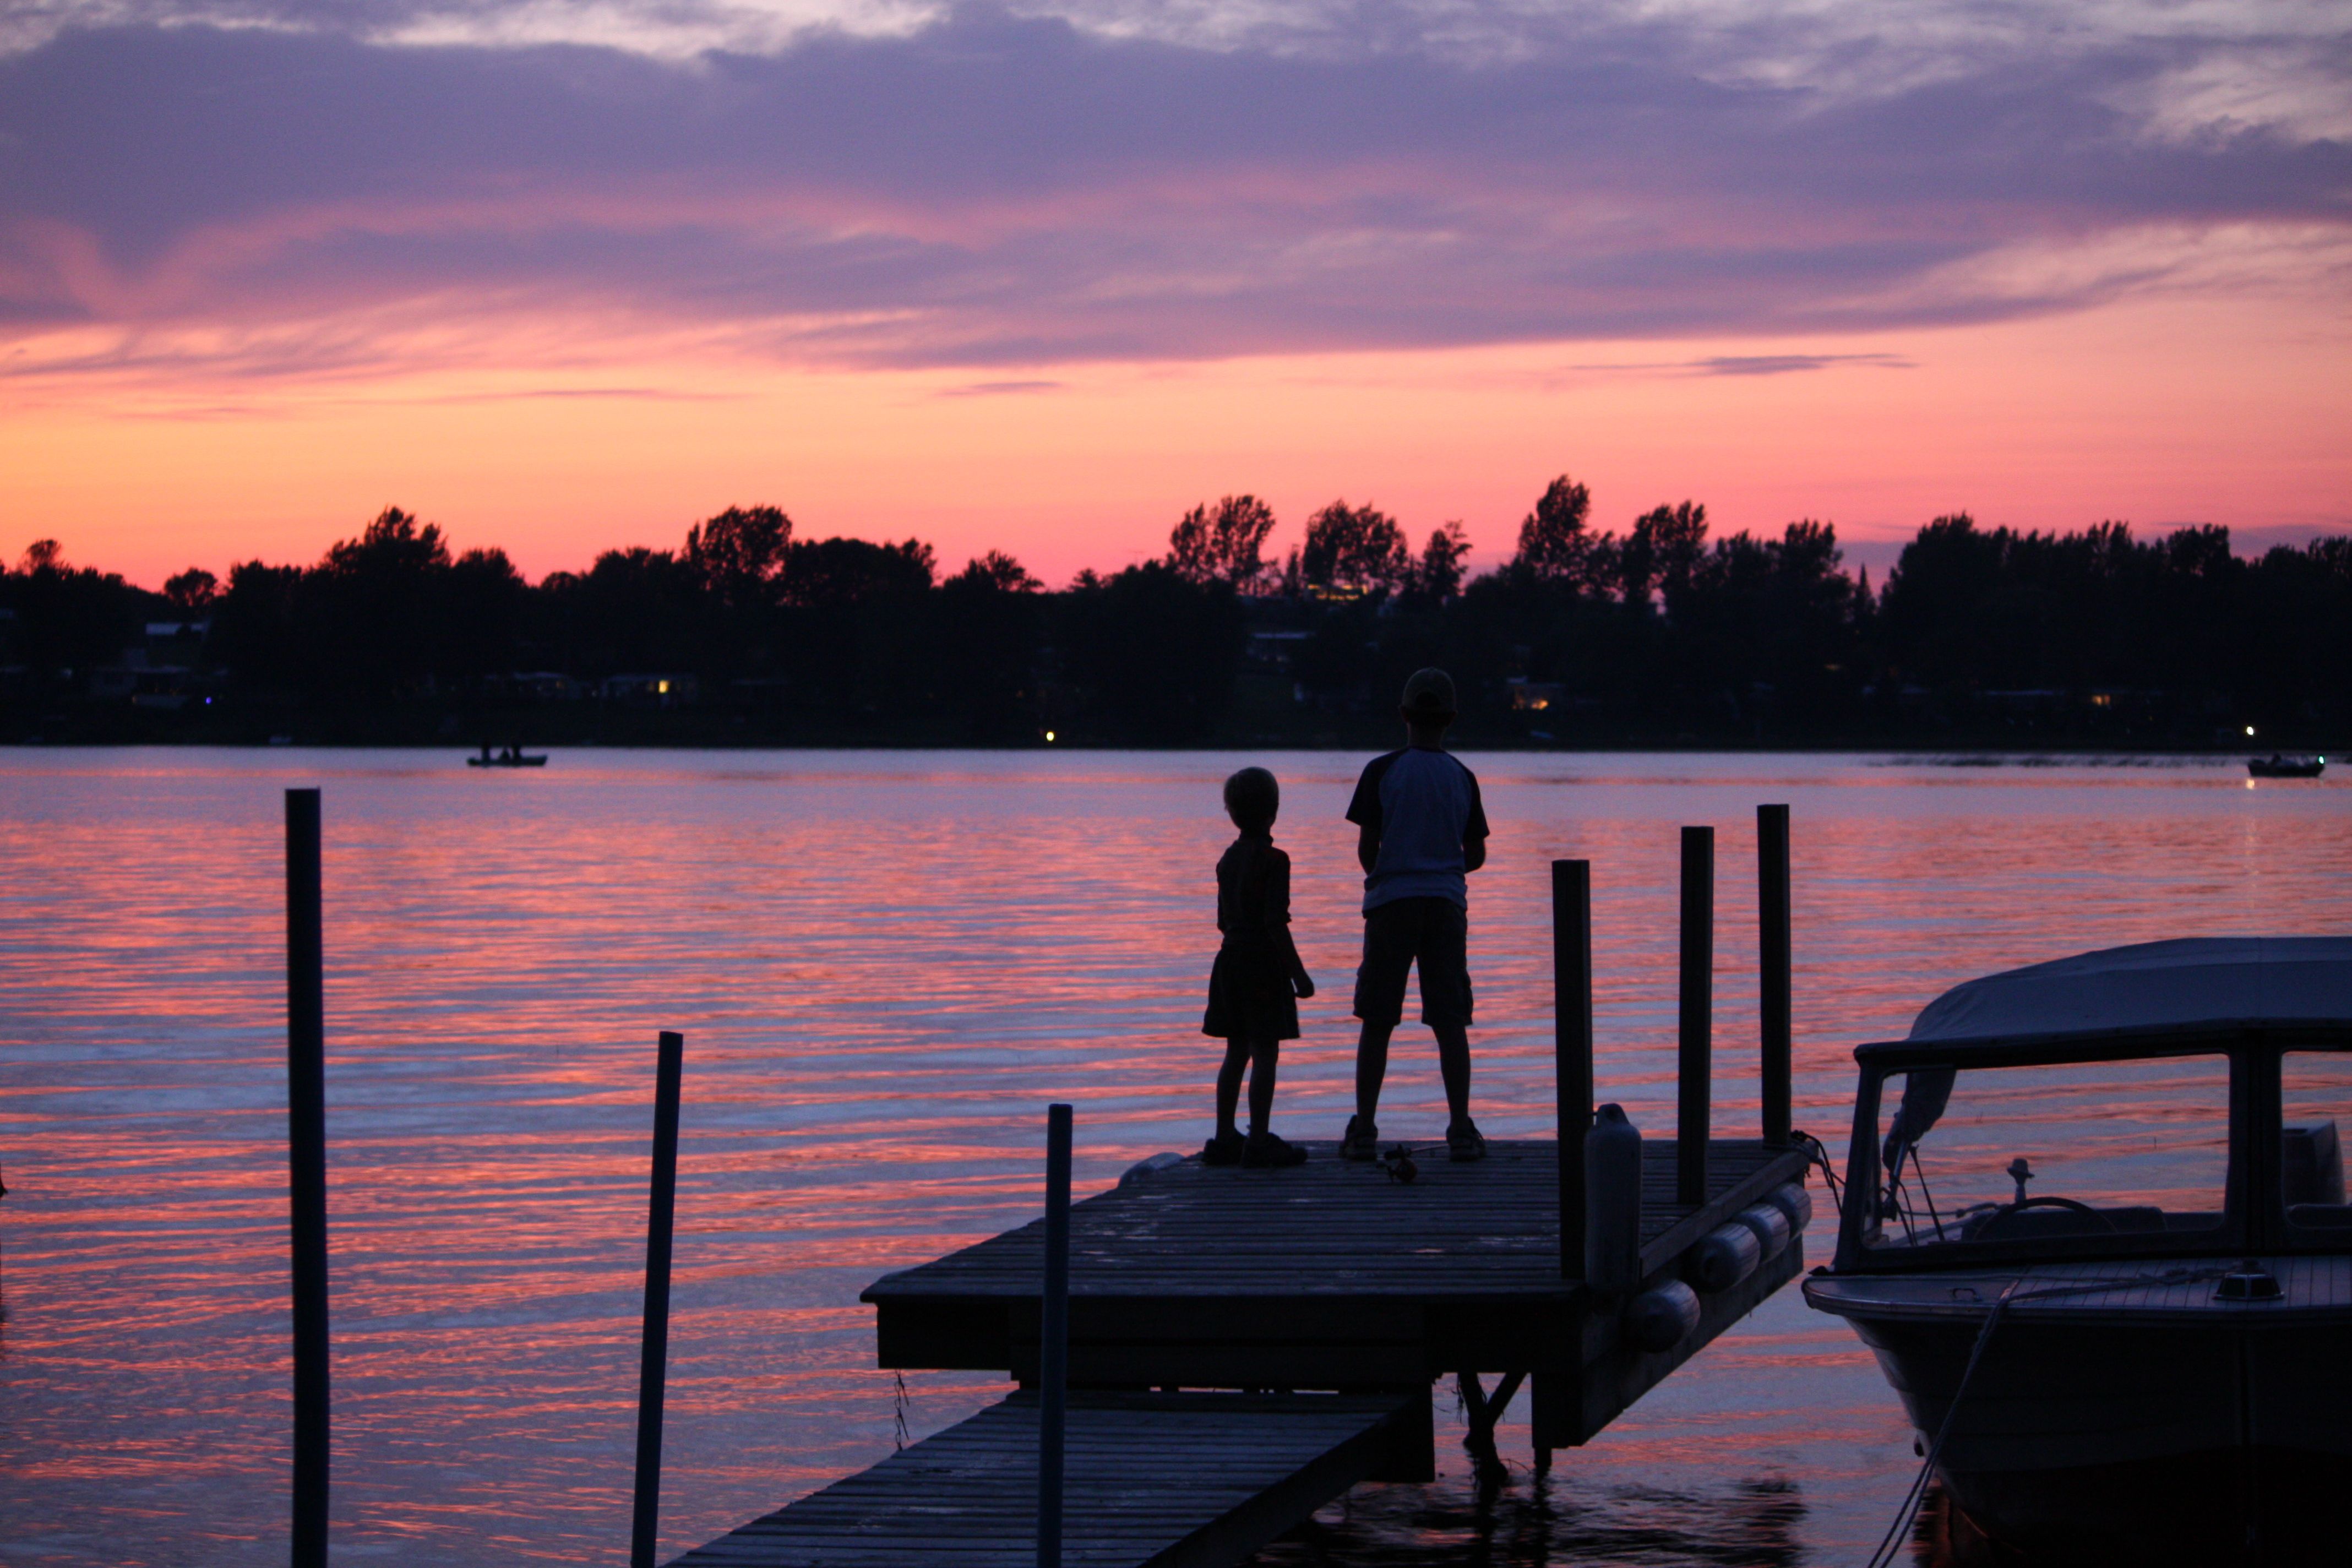 Rice Lake Sunset - Ontario, Canada | Photography | Pinterest ...